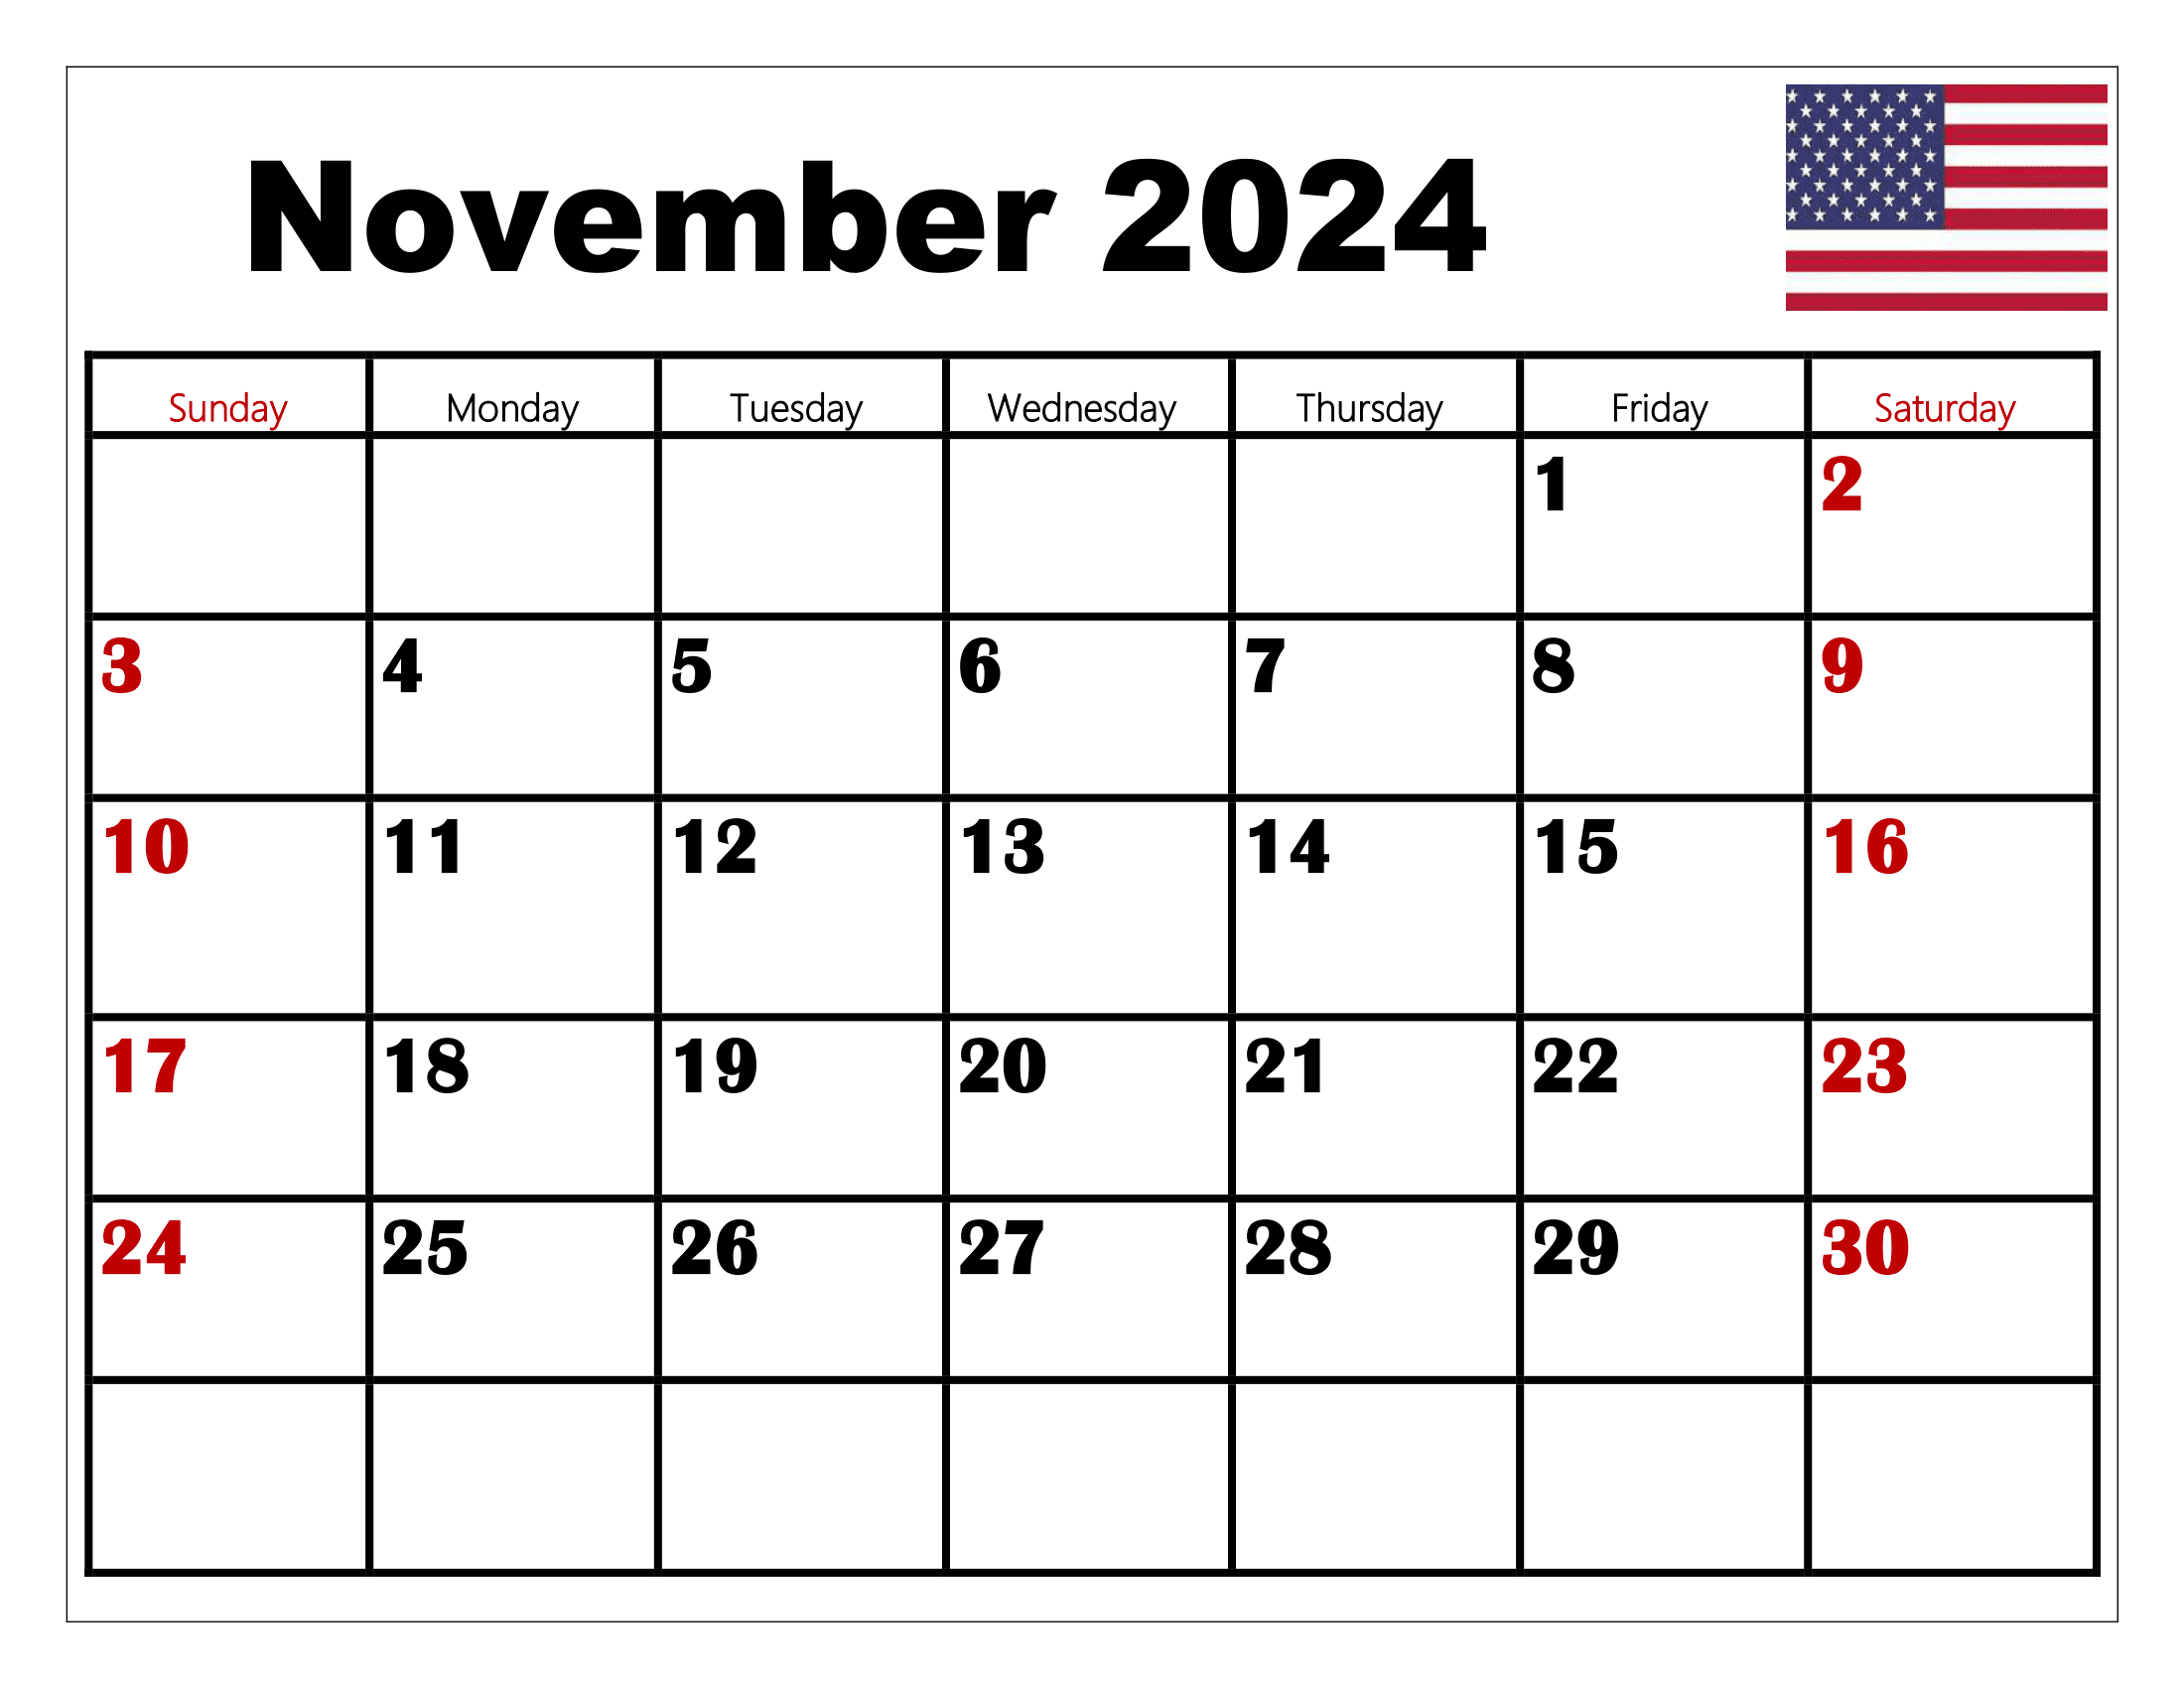 November 2024 Calendar Printable Pdf Template With Holidays for November 2024 Calendar With Holidays Printable